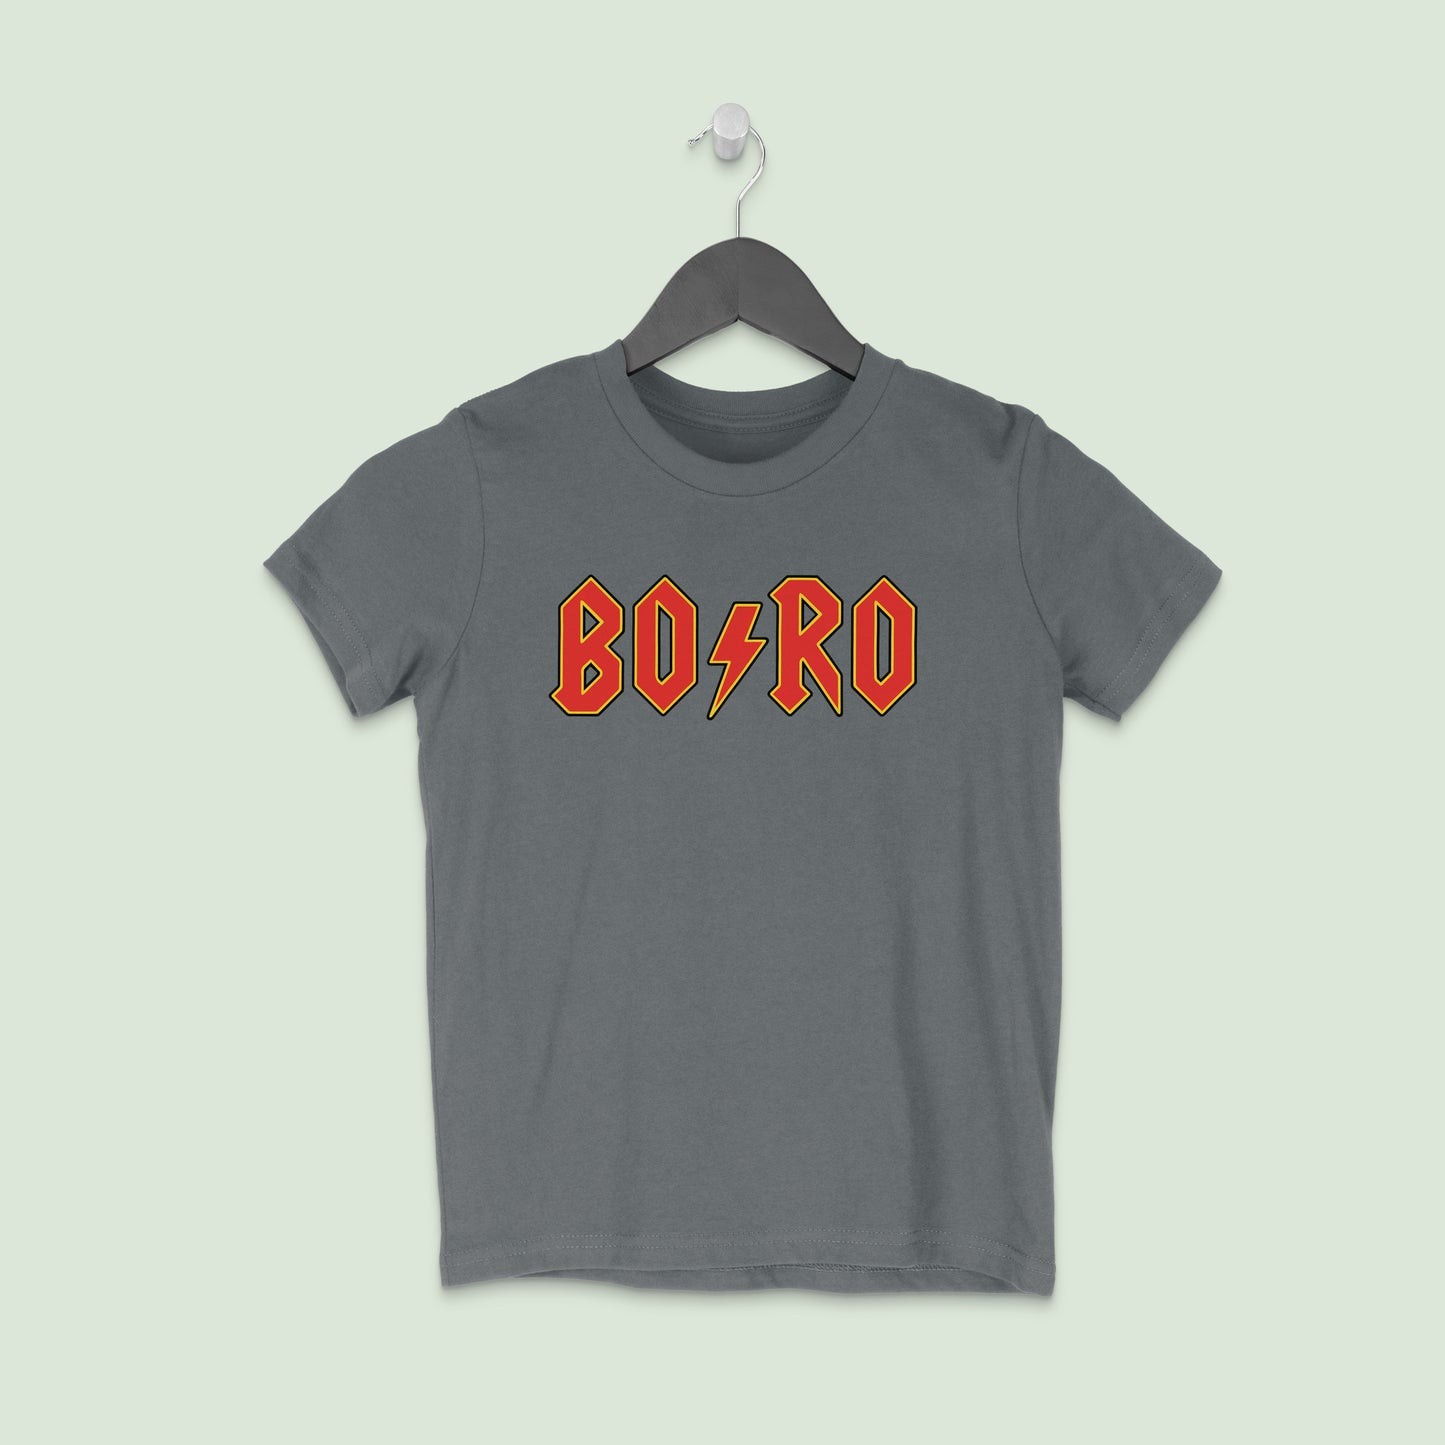 Boro AC/DC Kids T-Shirt